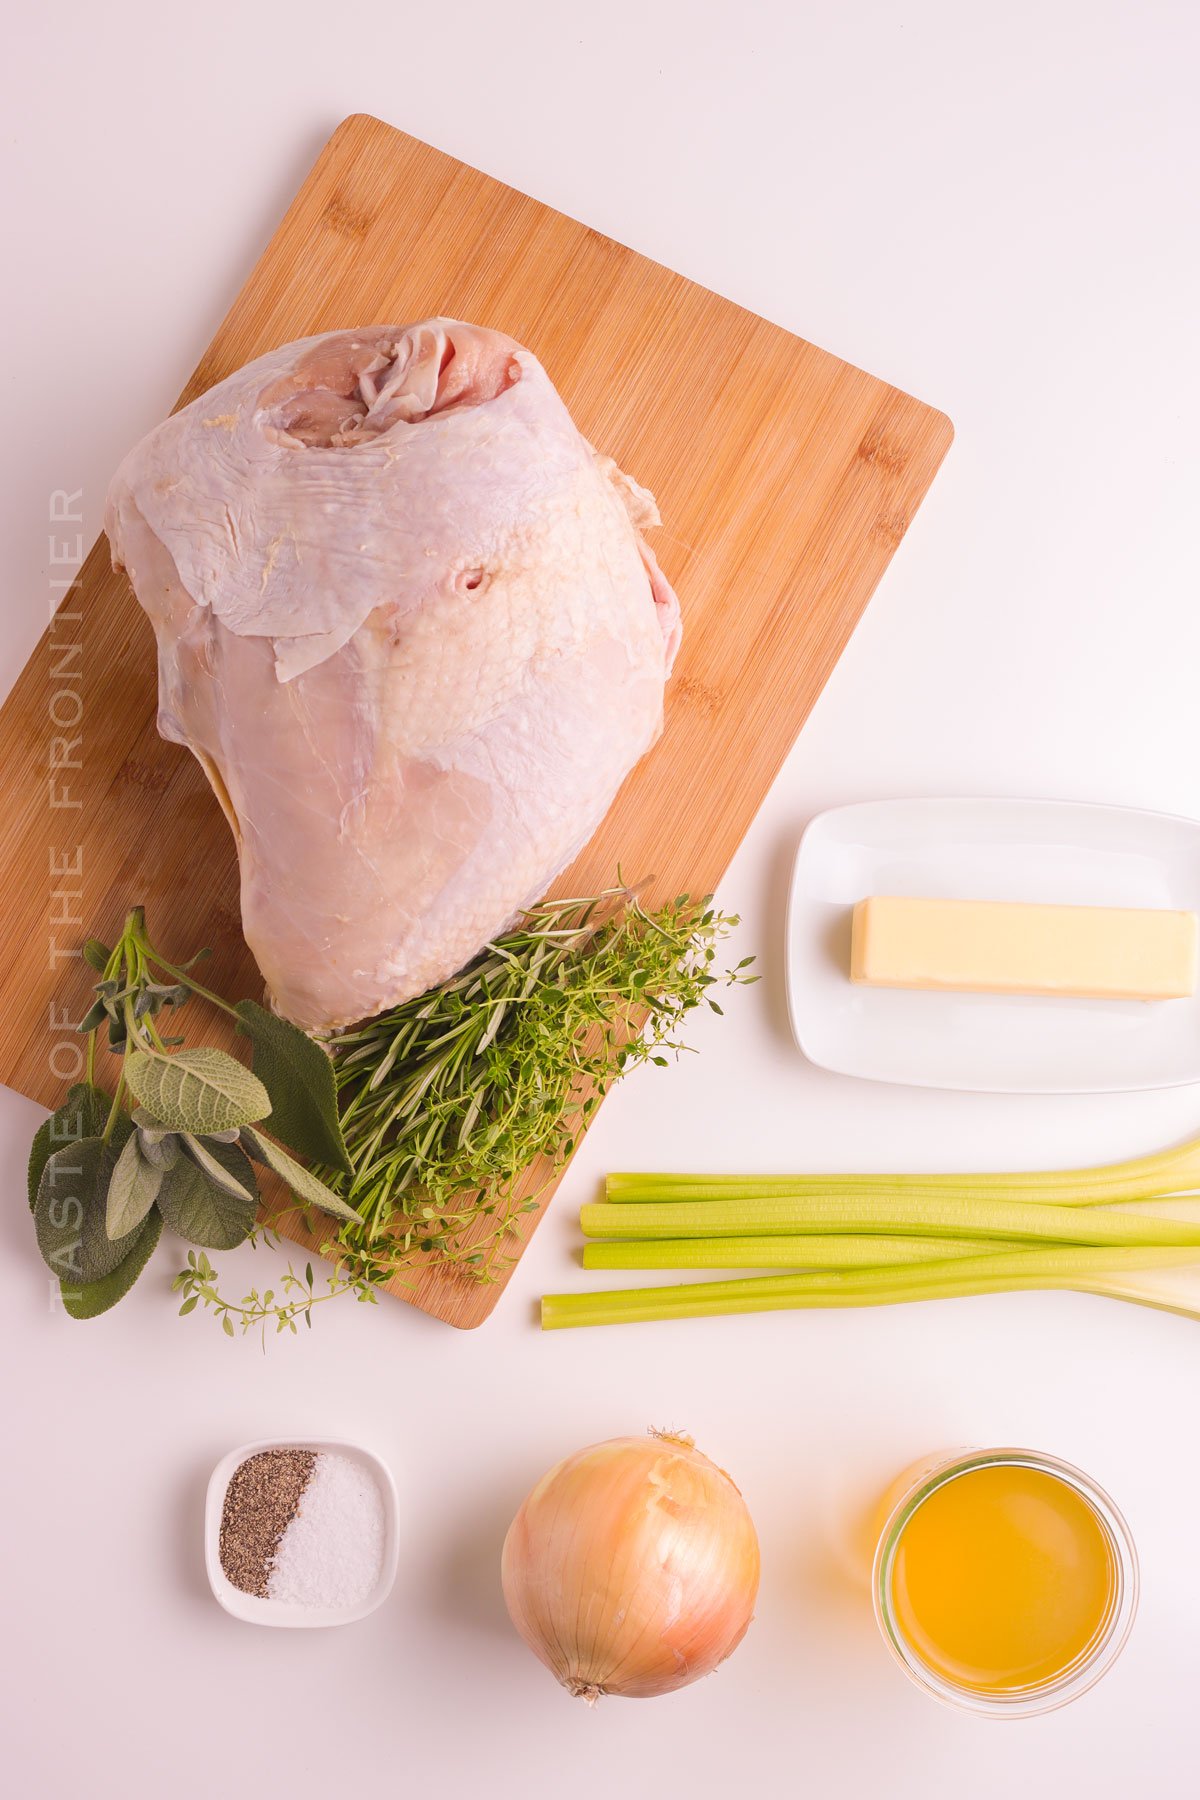 Grilled Turkey Breast ingredients